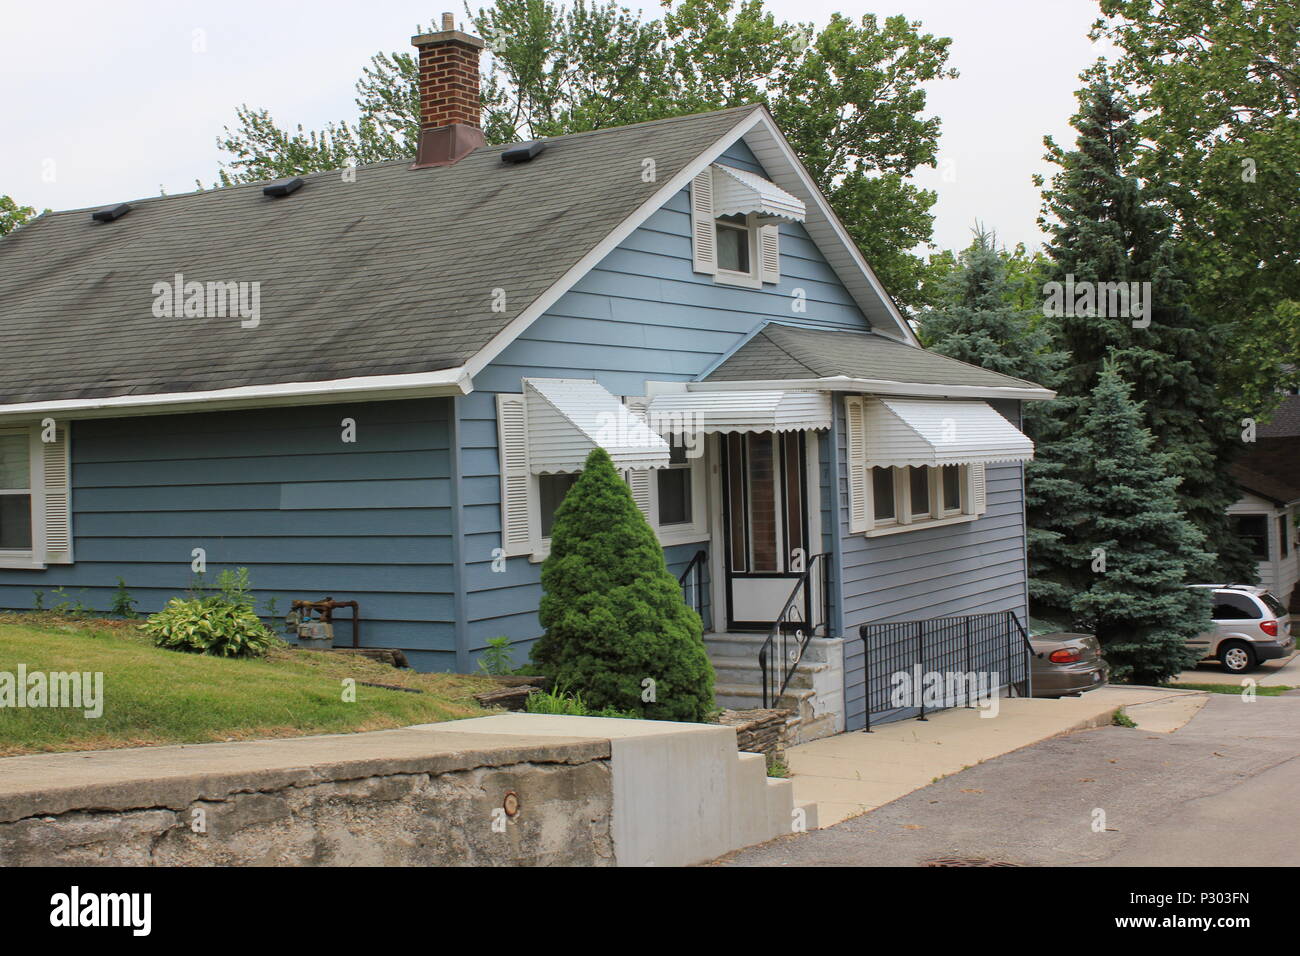 Local residential street scene and scenery of historic Lemont, Illinois. Stock Photo